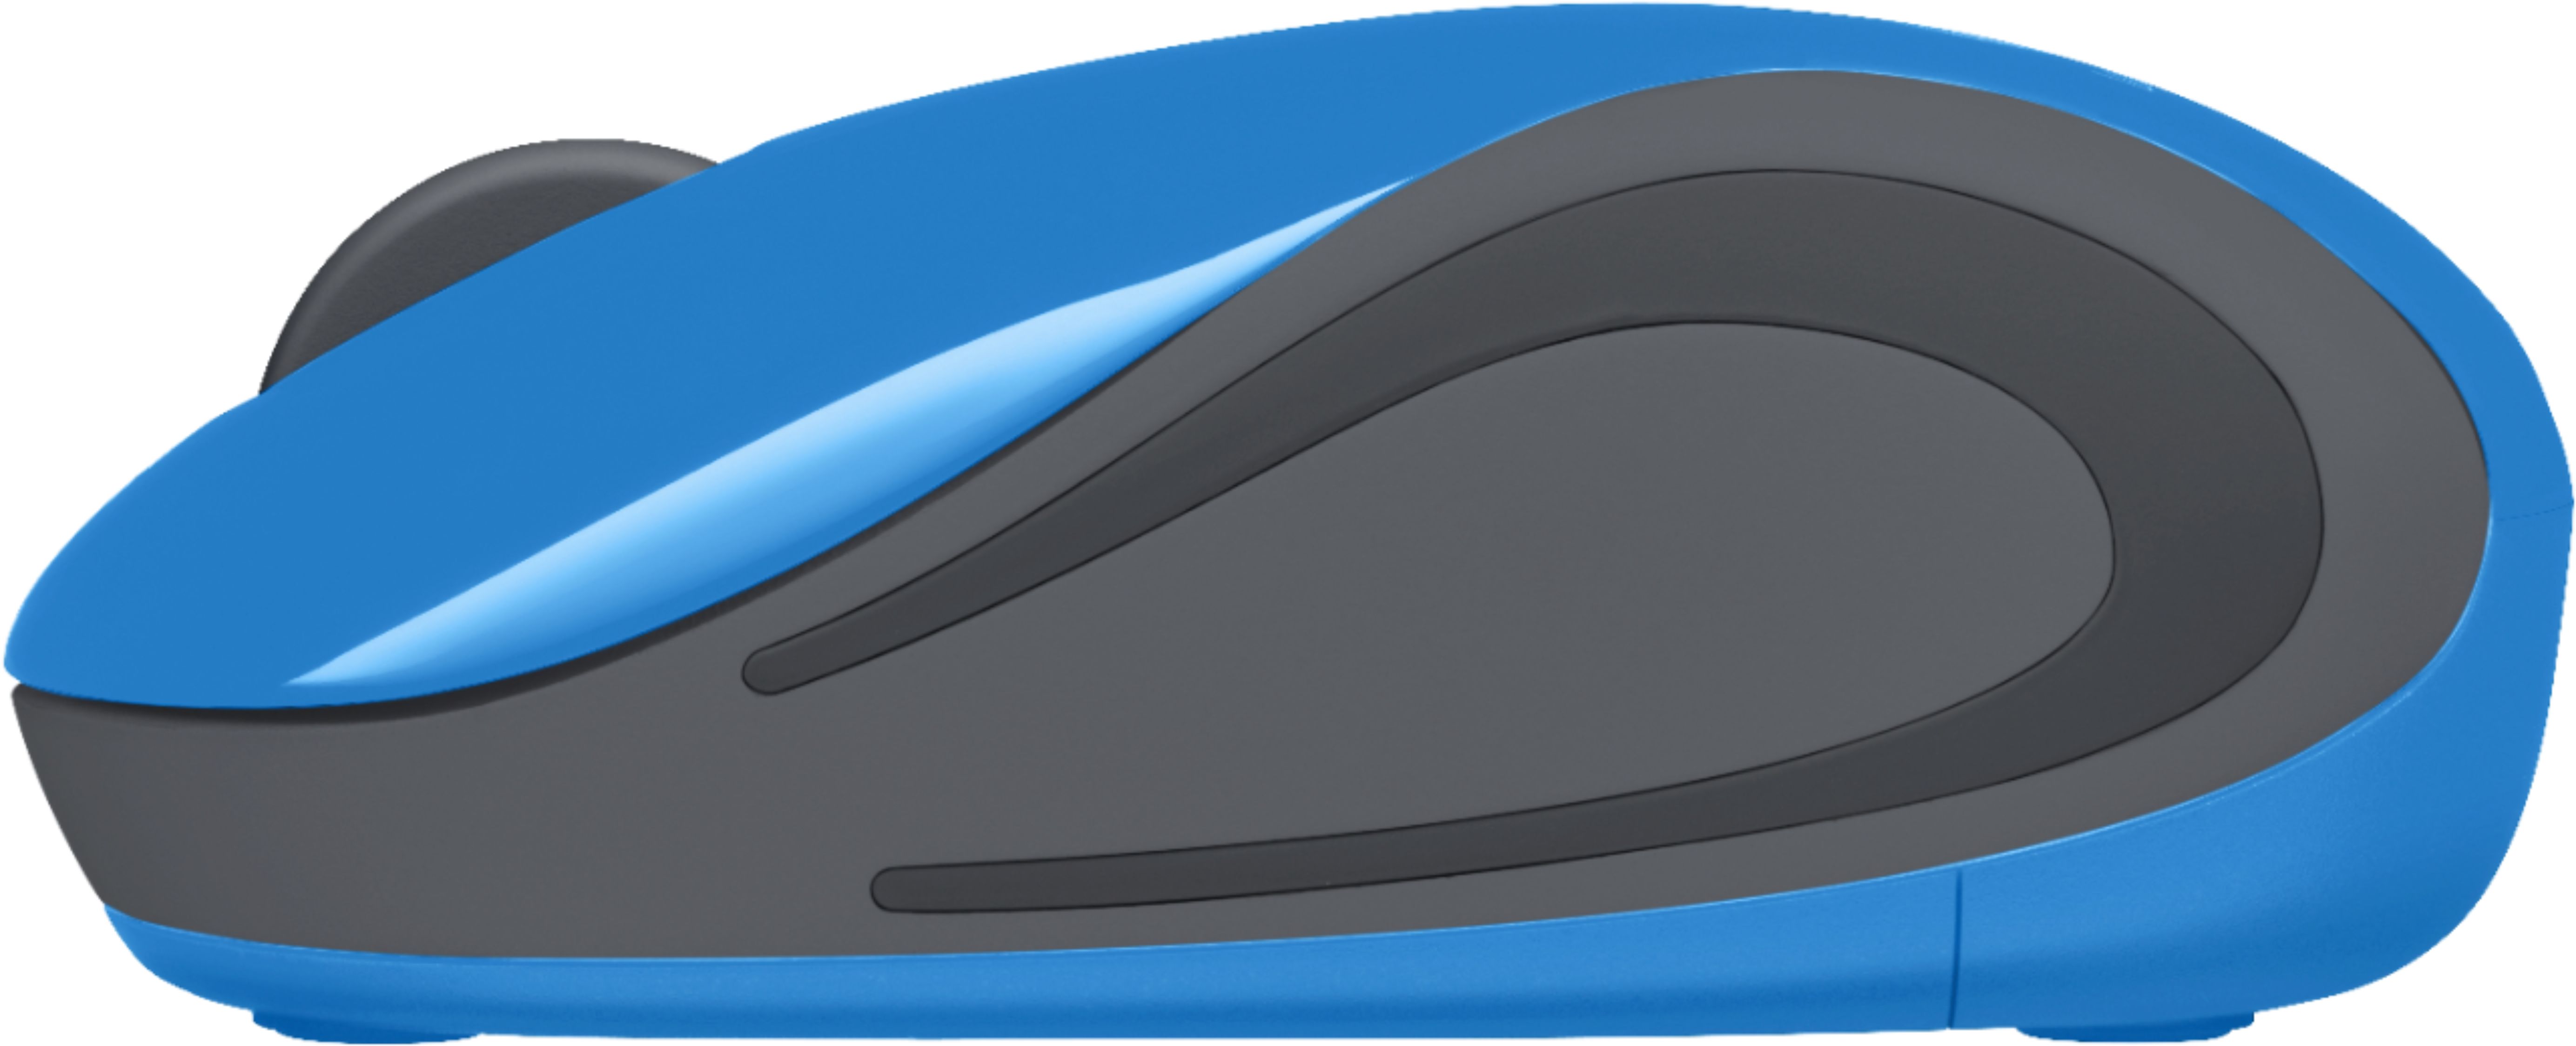 Best Buy: Logitech M187 Mini Mouse 910-002728 Optical Ambidextrous Blue-gray Wireless